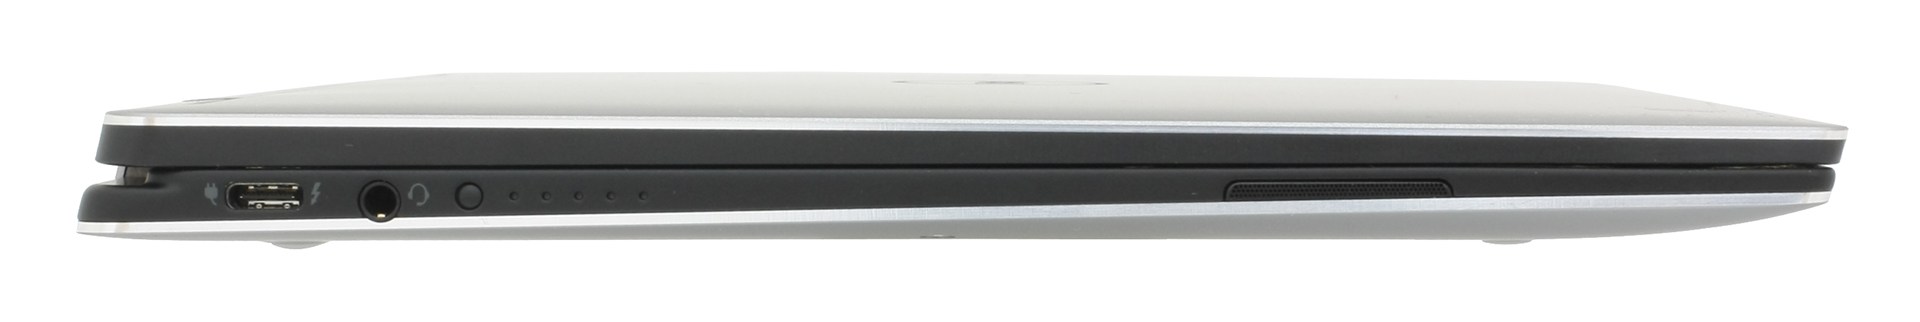 Dell XPS 13 9365 TouchScreen bảo mật an toàn